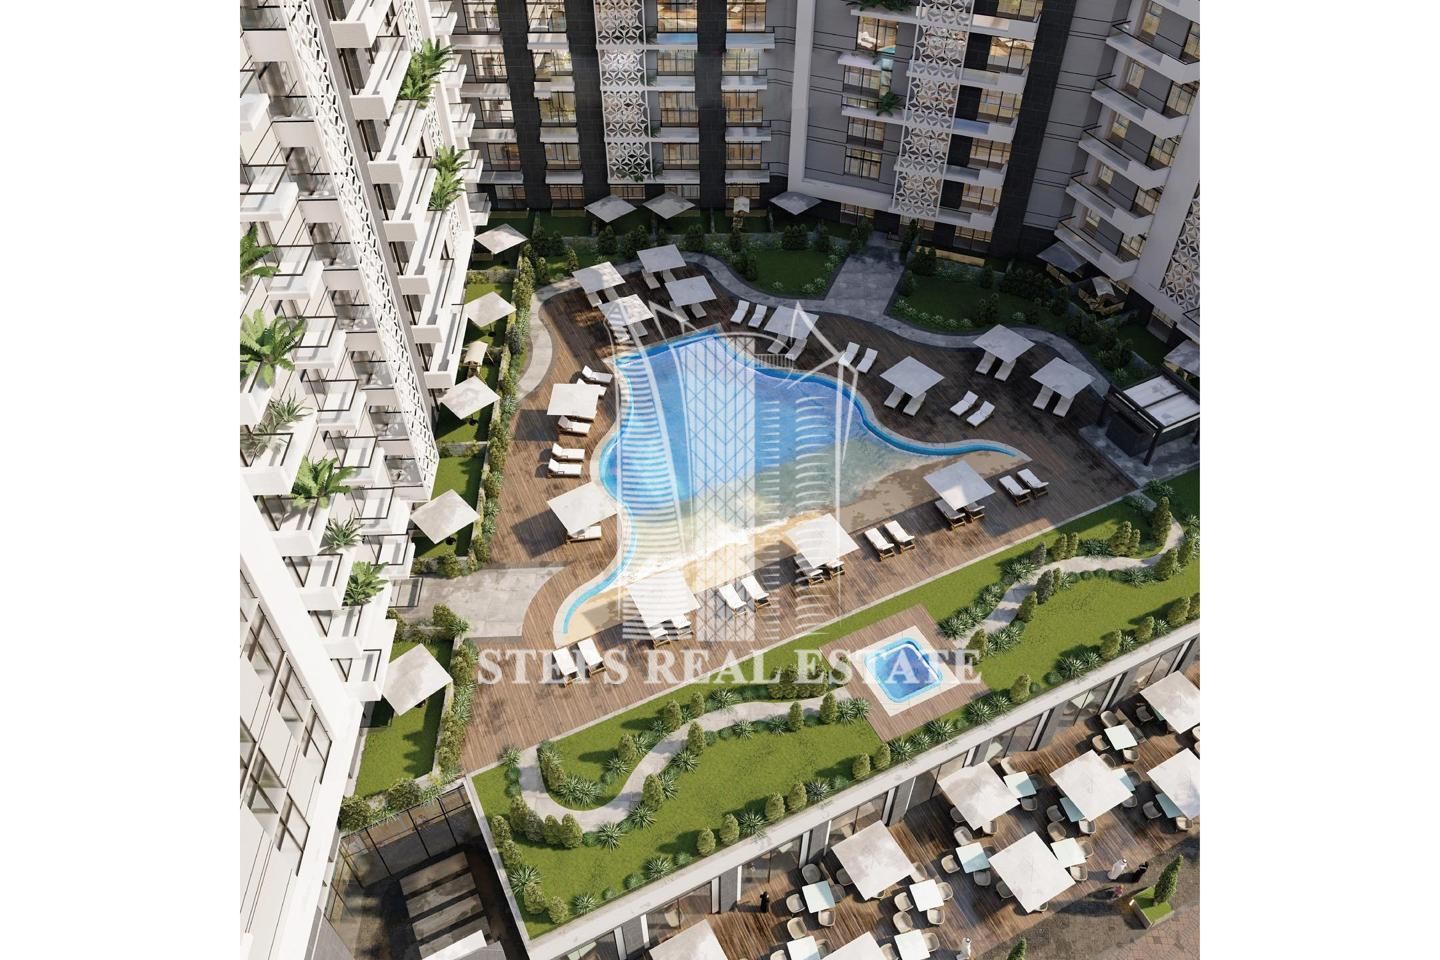 Stunning 2BHK Apartment | 5-Year Payment Plan | Near Lusail Boulevard